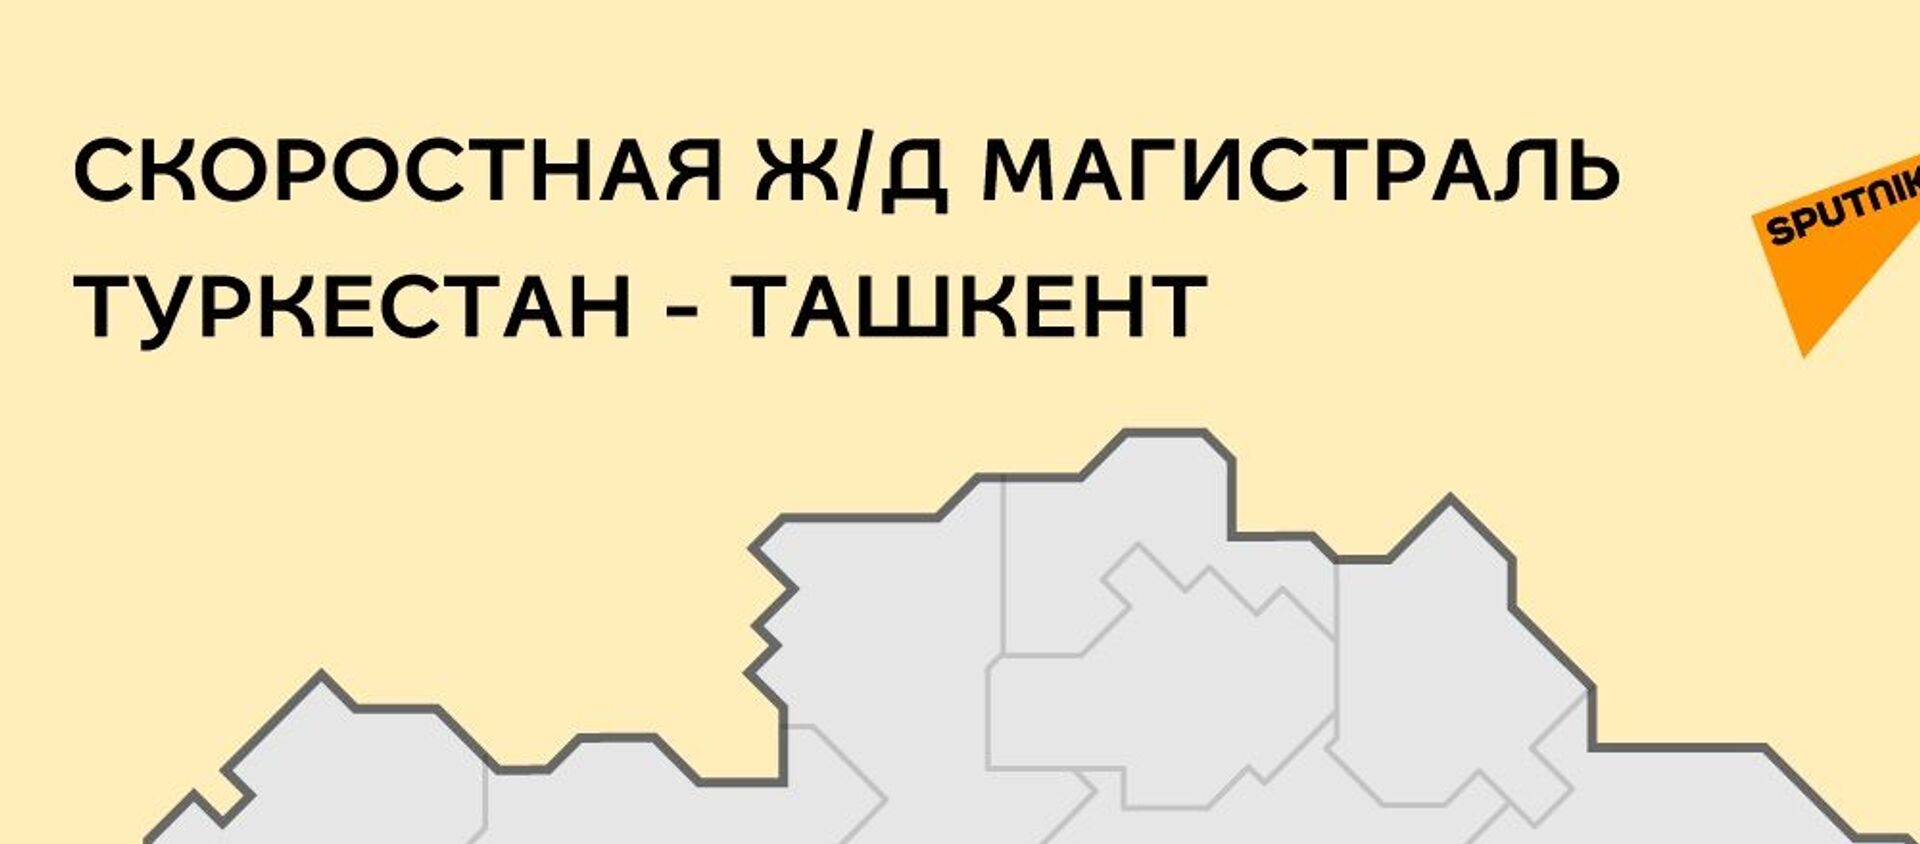 Скоростная ж/д магистраль Туркестан — Ташкент - Sputnik Узбекистан, 1920, 15.02.2021